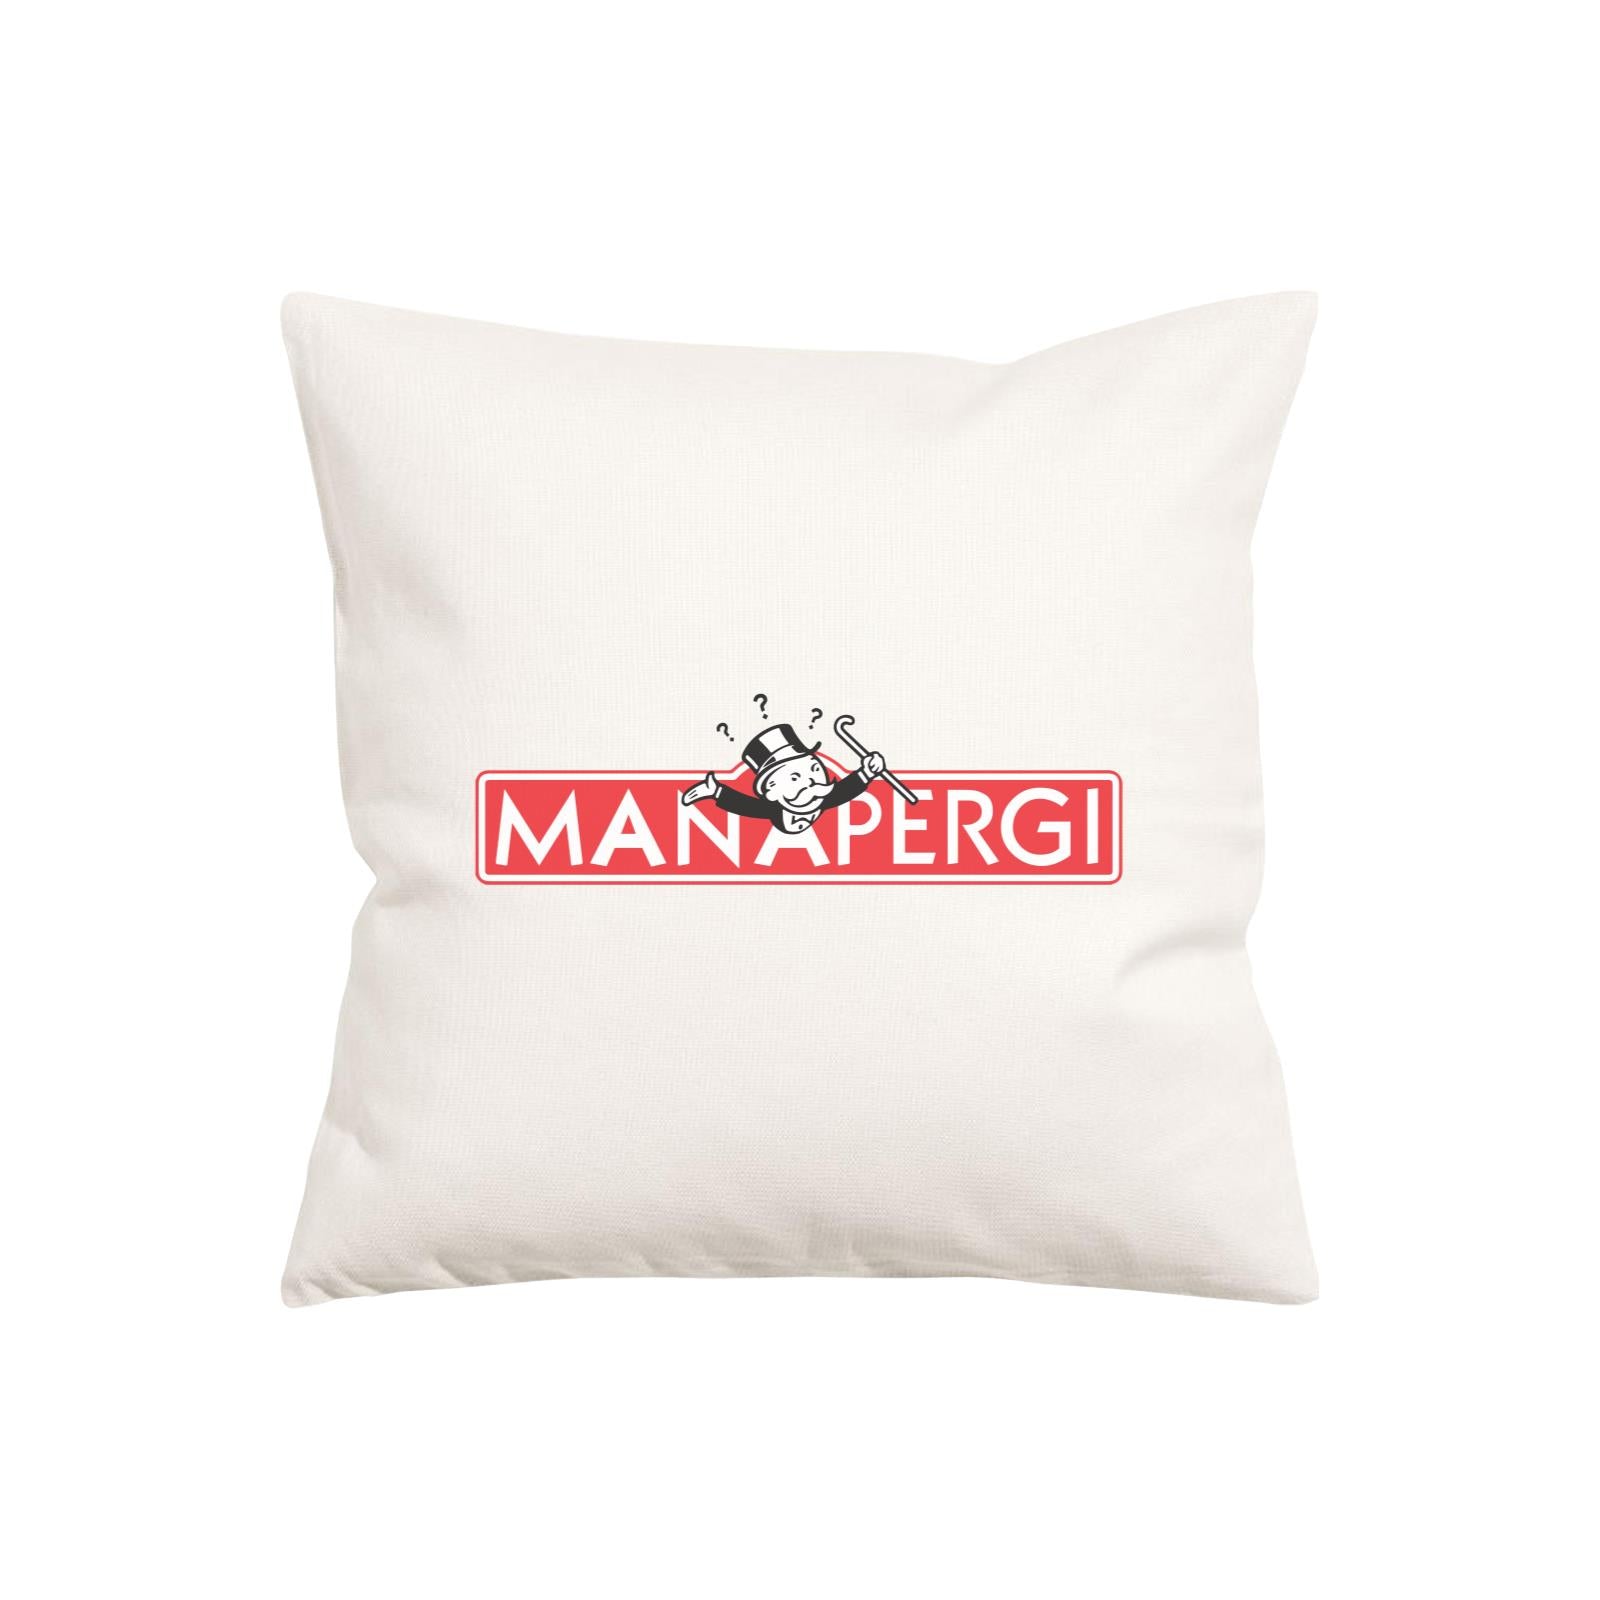 Slang Statement Manapergi Pillow Cushion